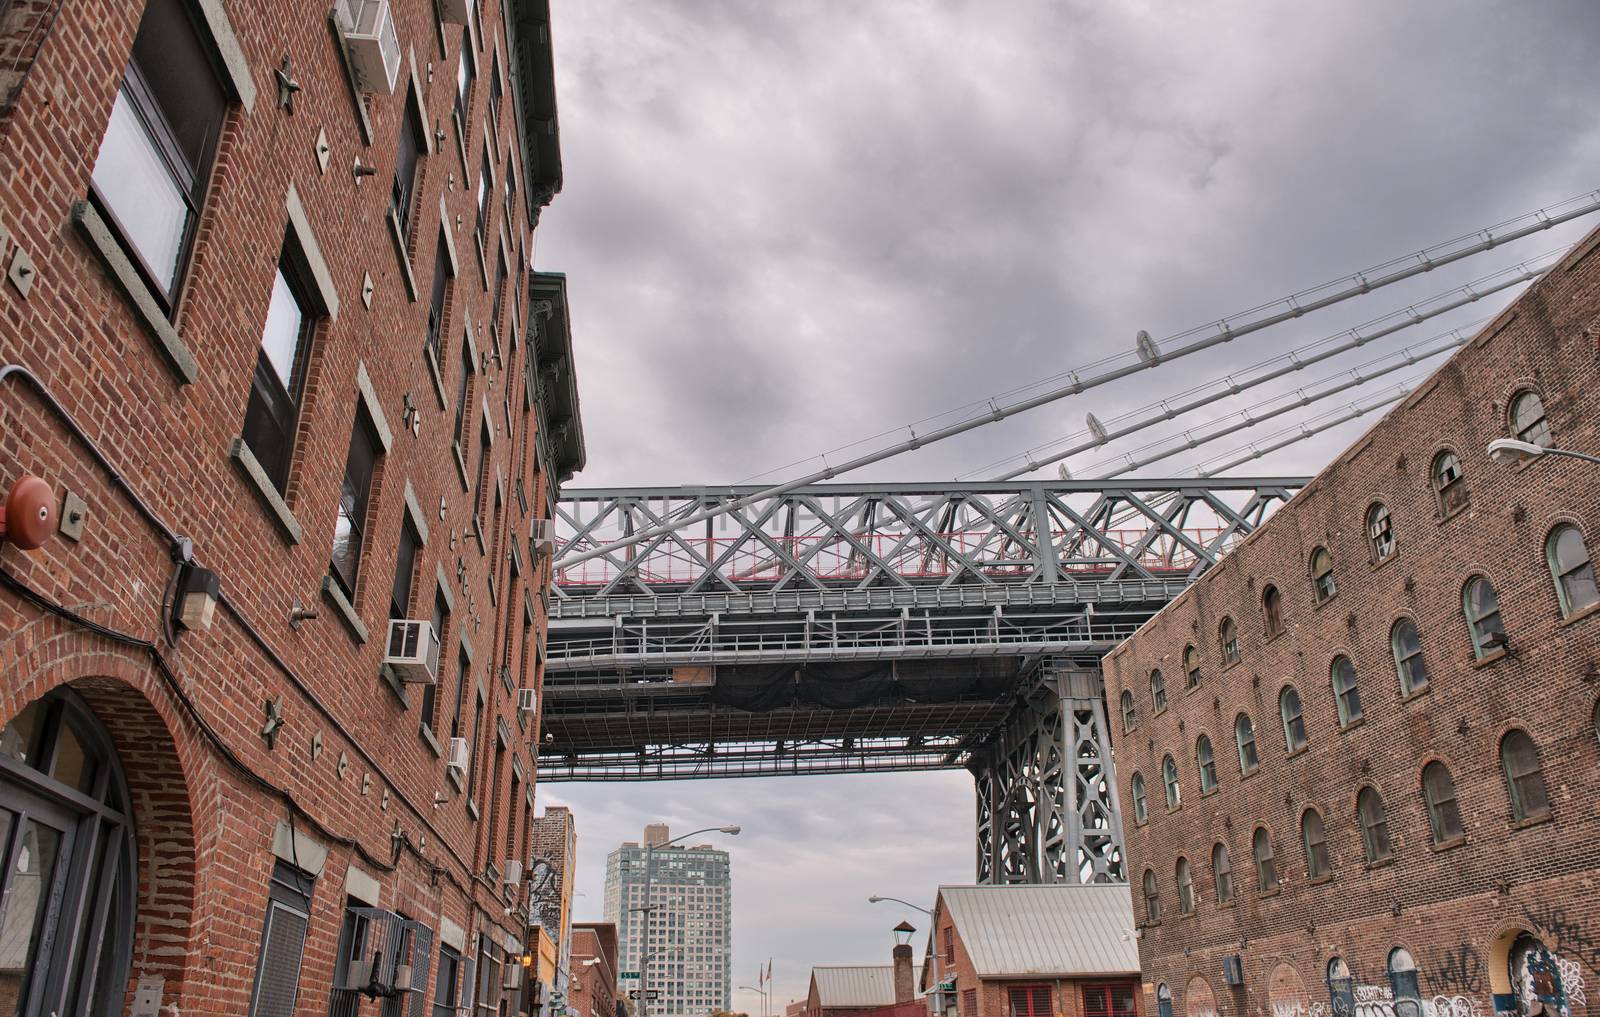 Metallic structure of Manhattan Bridge among classic Brooklyn buildings, New York City.